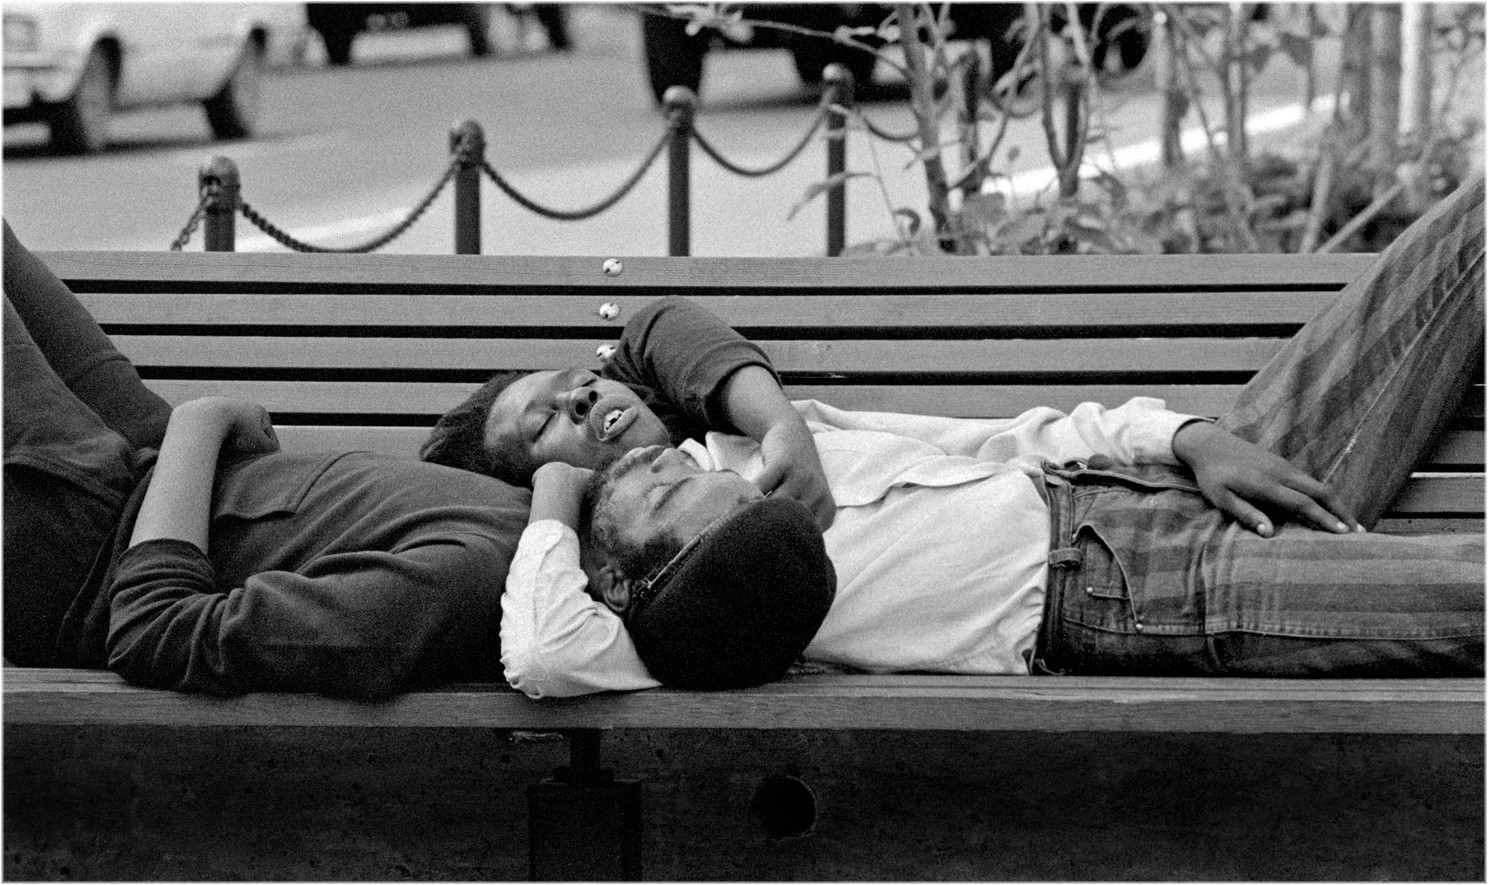 Бродвейский сон, Нью-Йорк, 1988. Фотограф Мэтт Вебер